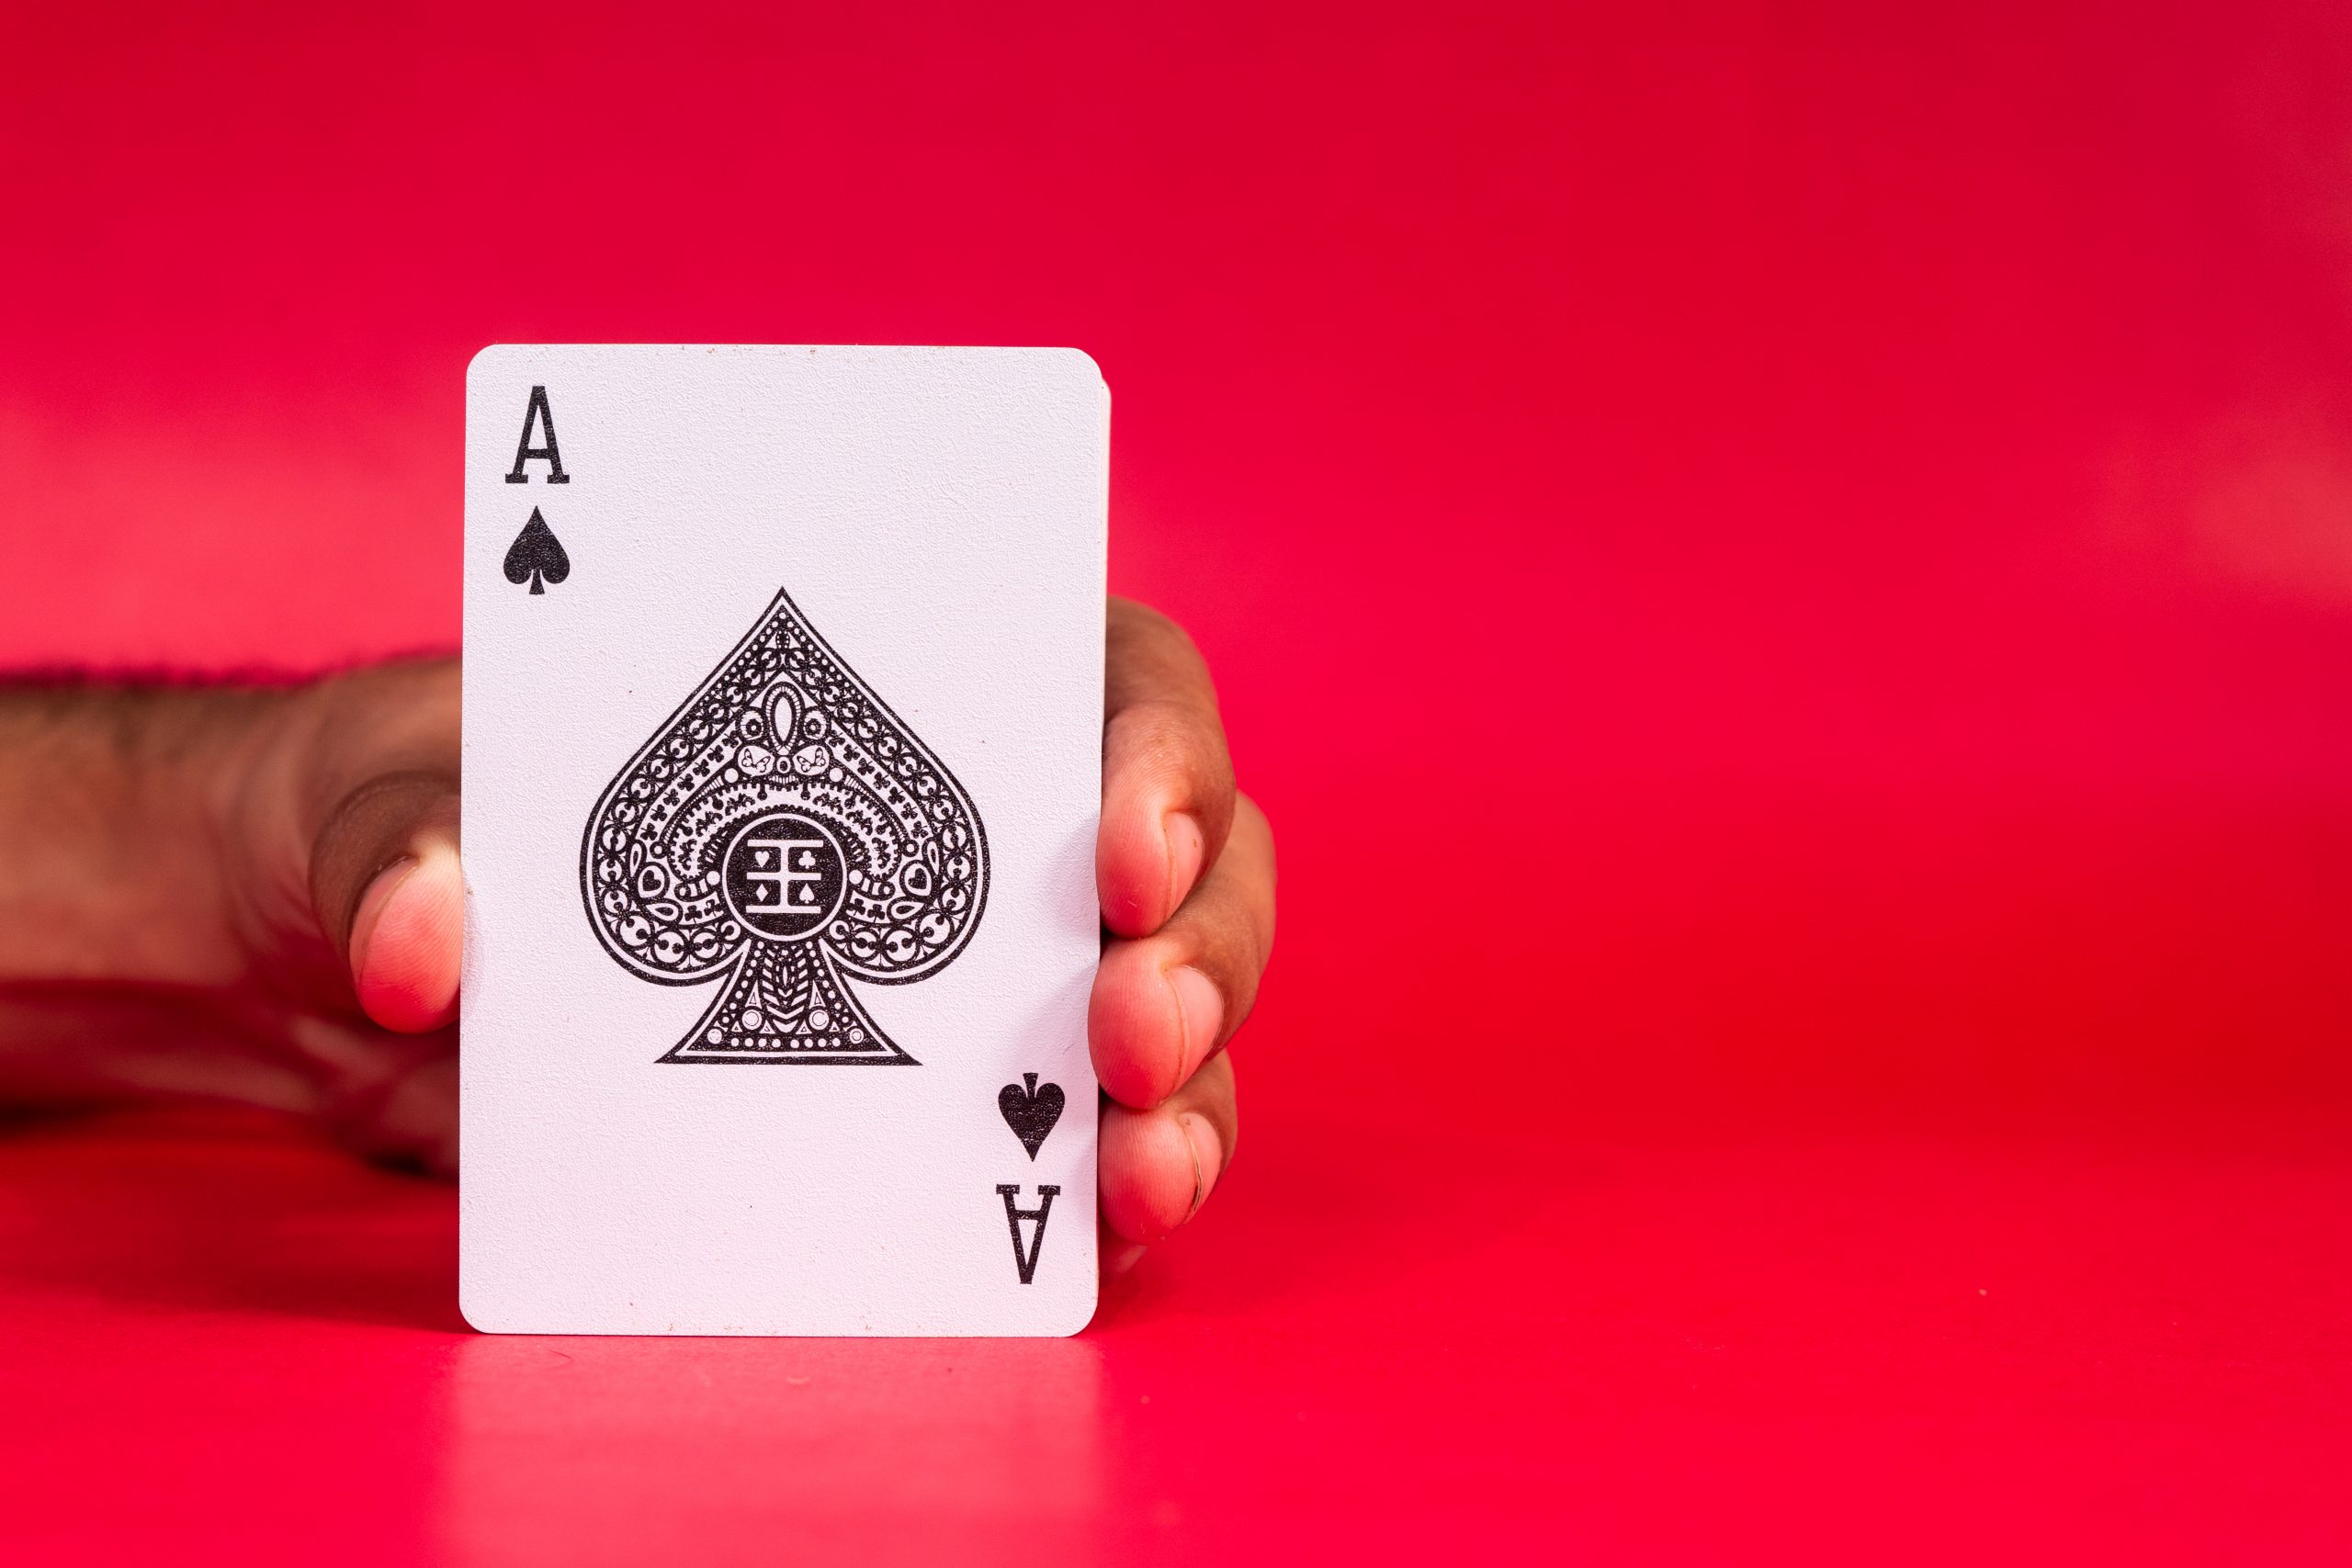 Ace of spades card